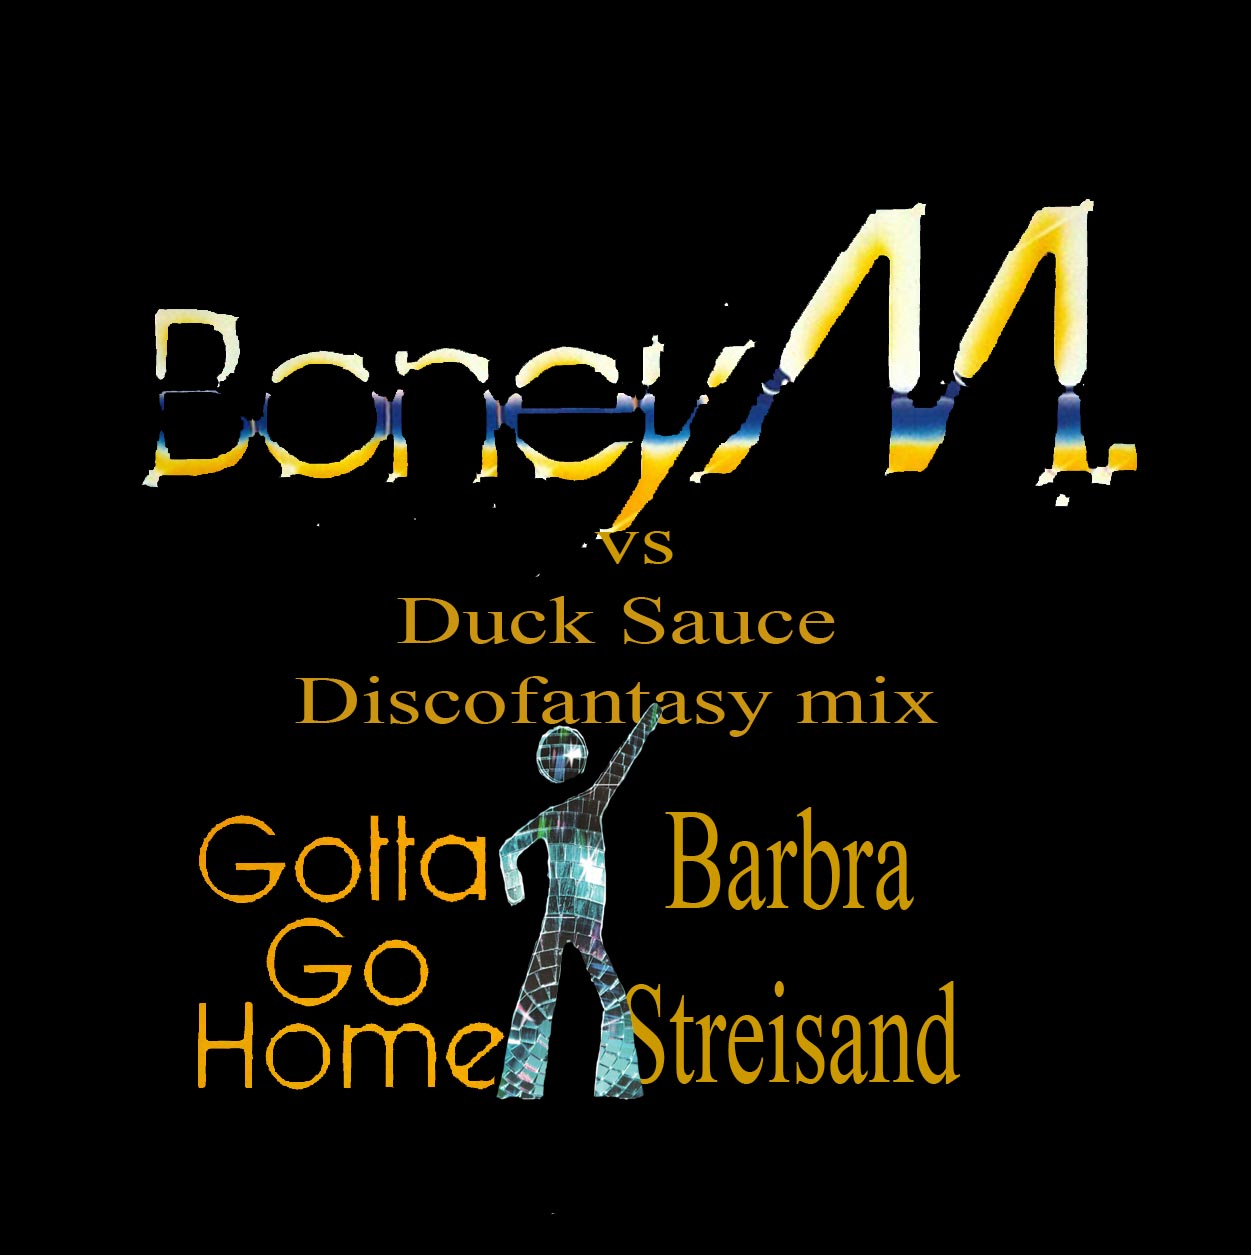 https://blogger.googleusercontent.com/img/b/R29vZ2xl/AVvXsEg5aH7SW4kLW12egflqX6ix-zcrnwH_klF0o5nuBjTlDo5Q66yQLt2LiSwJSqkgIV1pZNoVQChd3Ctu1TJ4QuTXLyHR3bEOElYiOUC9ucy7S61QIuhZn2Fy0UyqshsoH5iJSKzS8ErZvA/s1600/Boney+M.+Vs+Duck+Sauce.+Gotta+Go+Home-Barbra+Streisand+.jpg